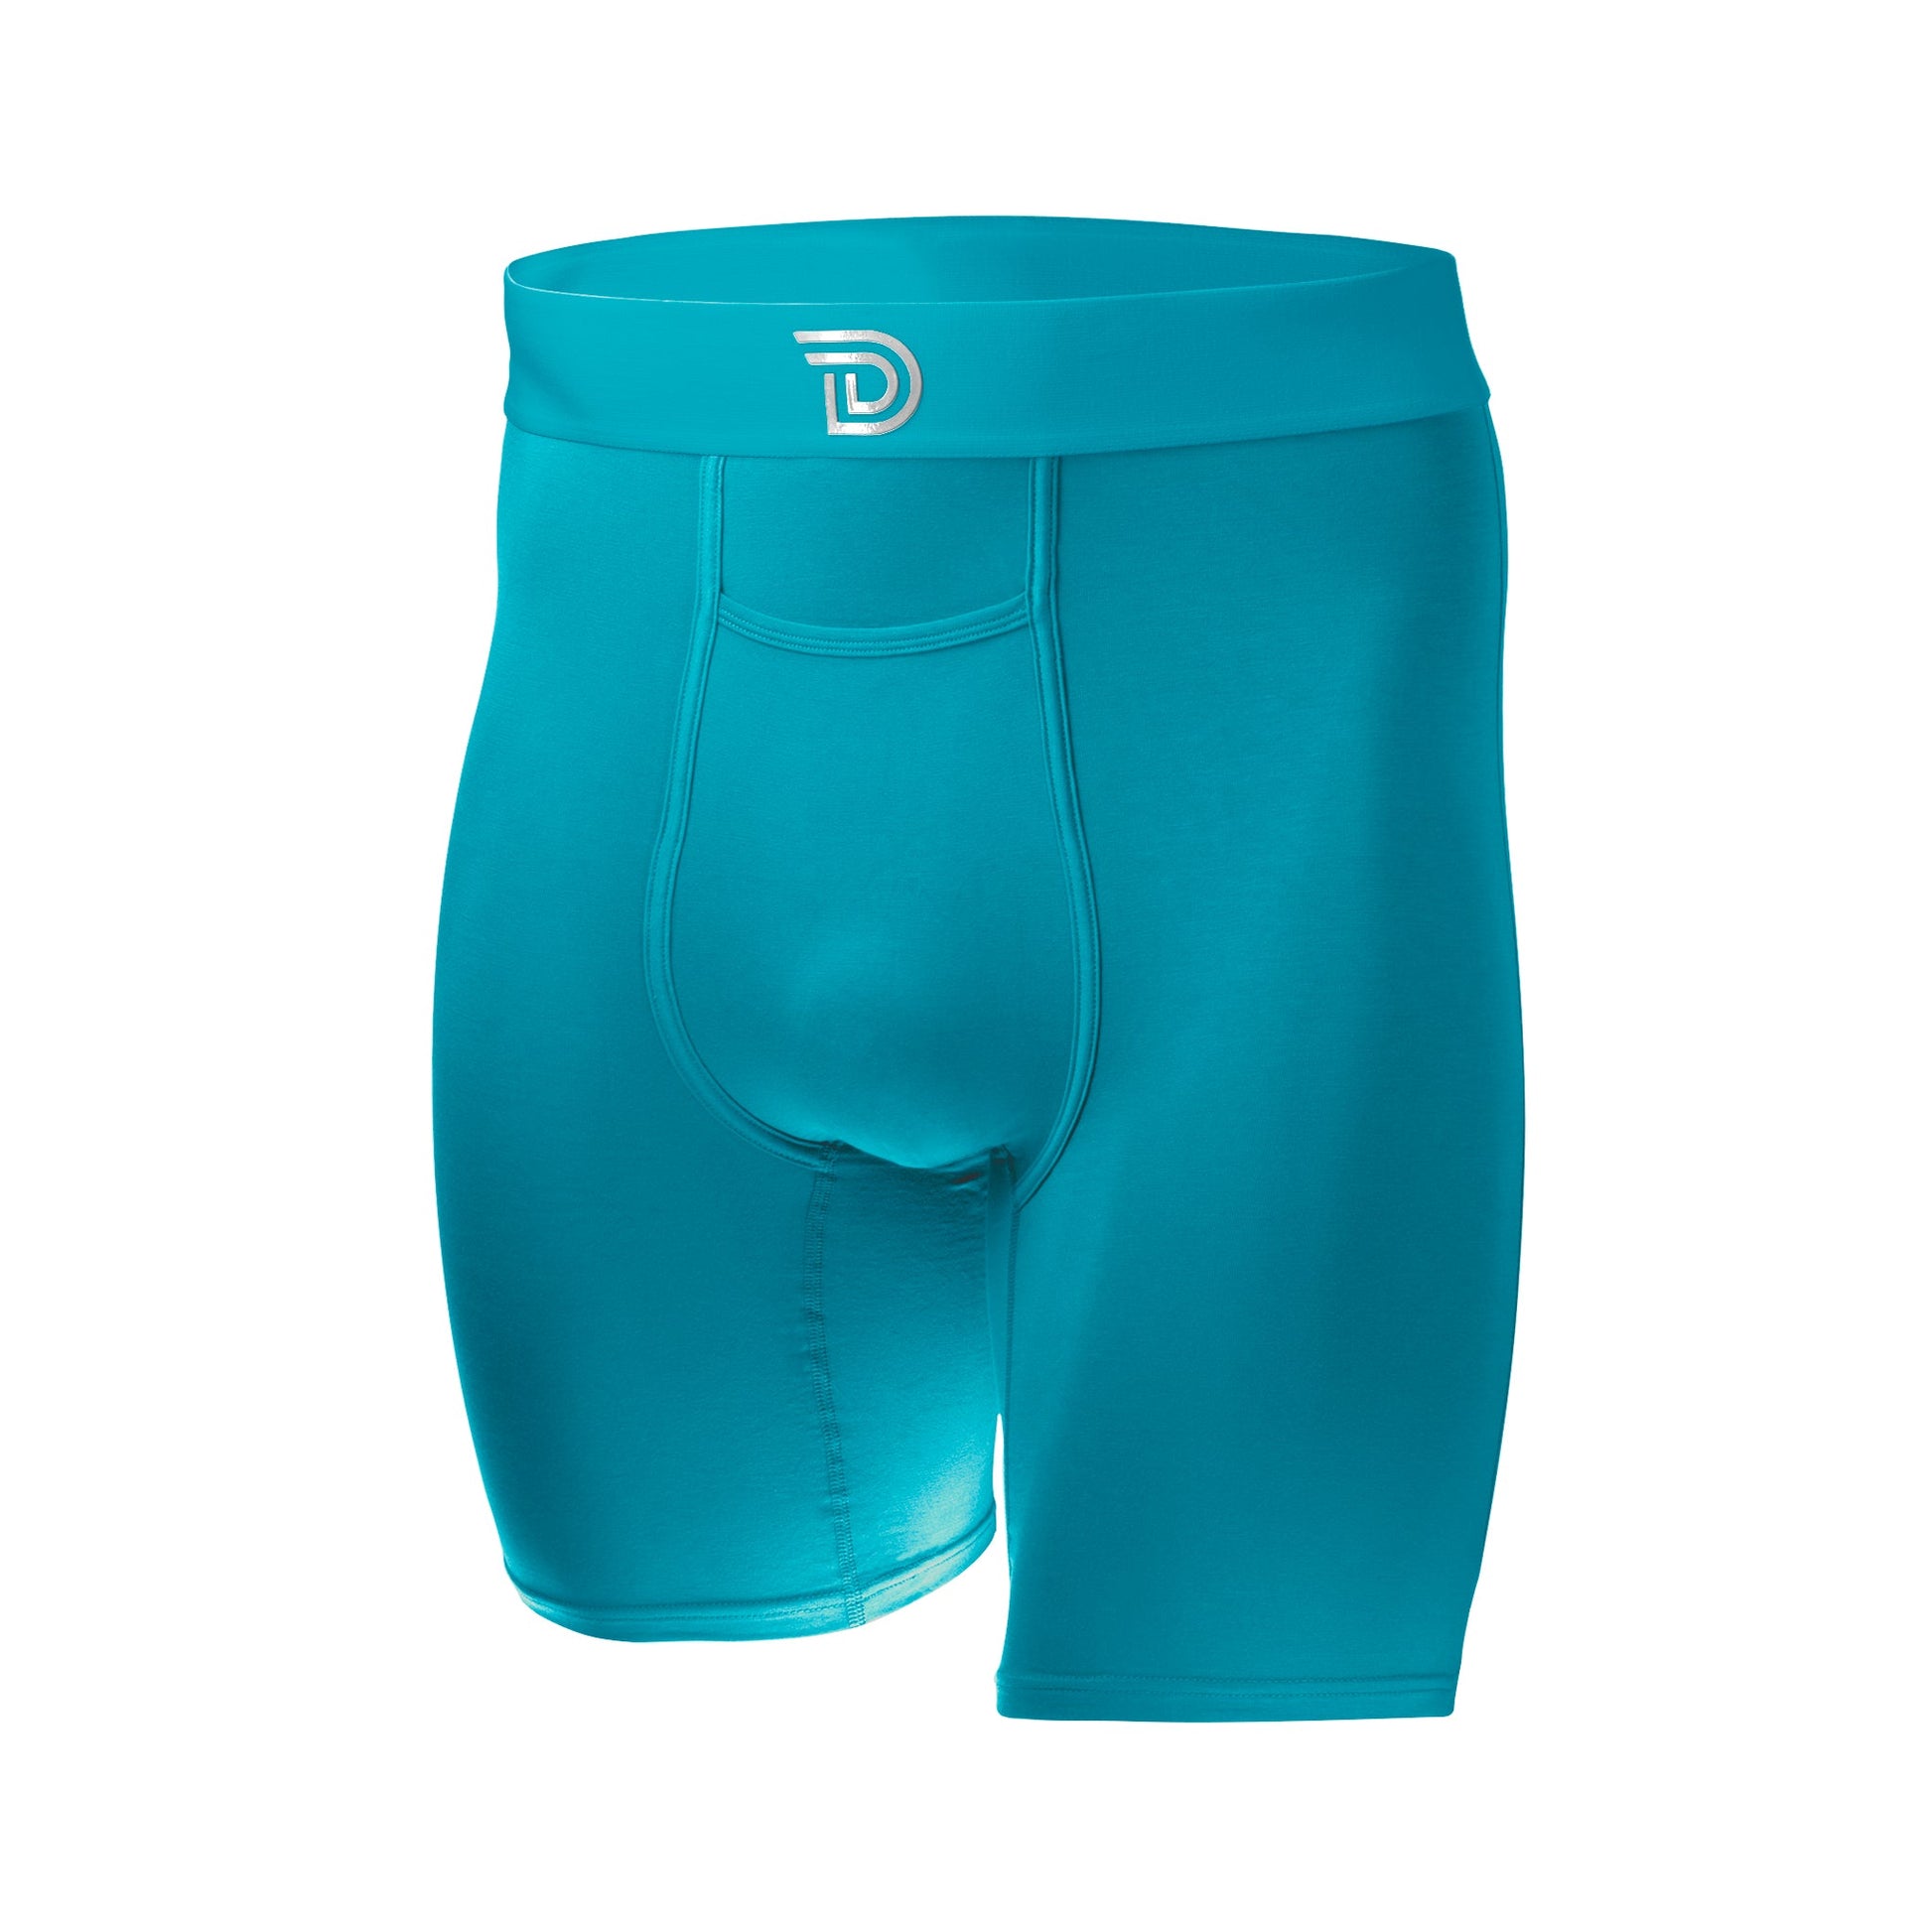 Drawlz Brand Co. , LLC Originalz Pacific Blue OriginalZ Pacific Blue Men's Boxer Brief Underwear